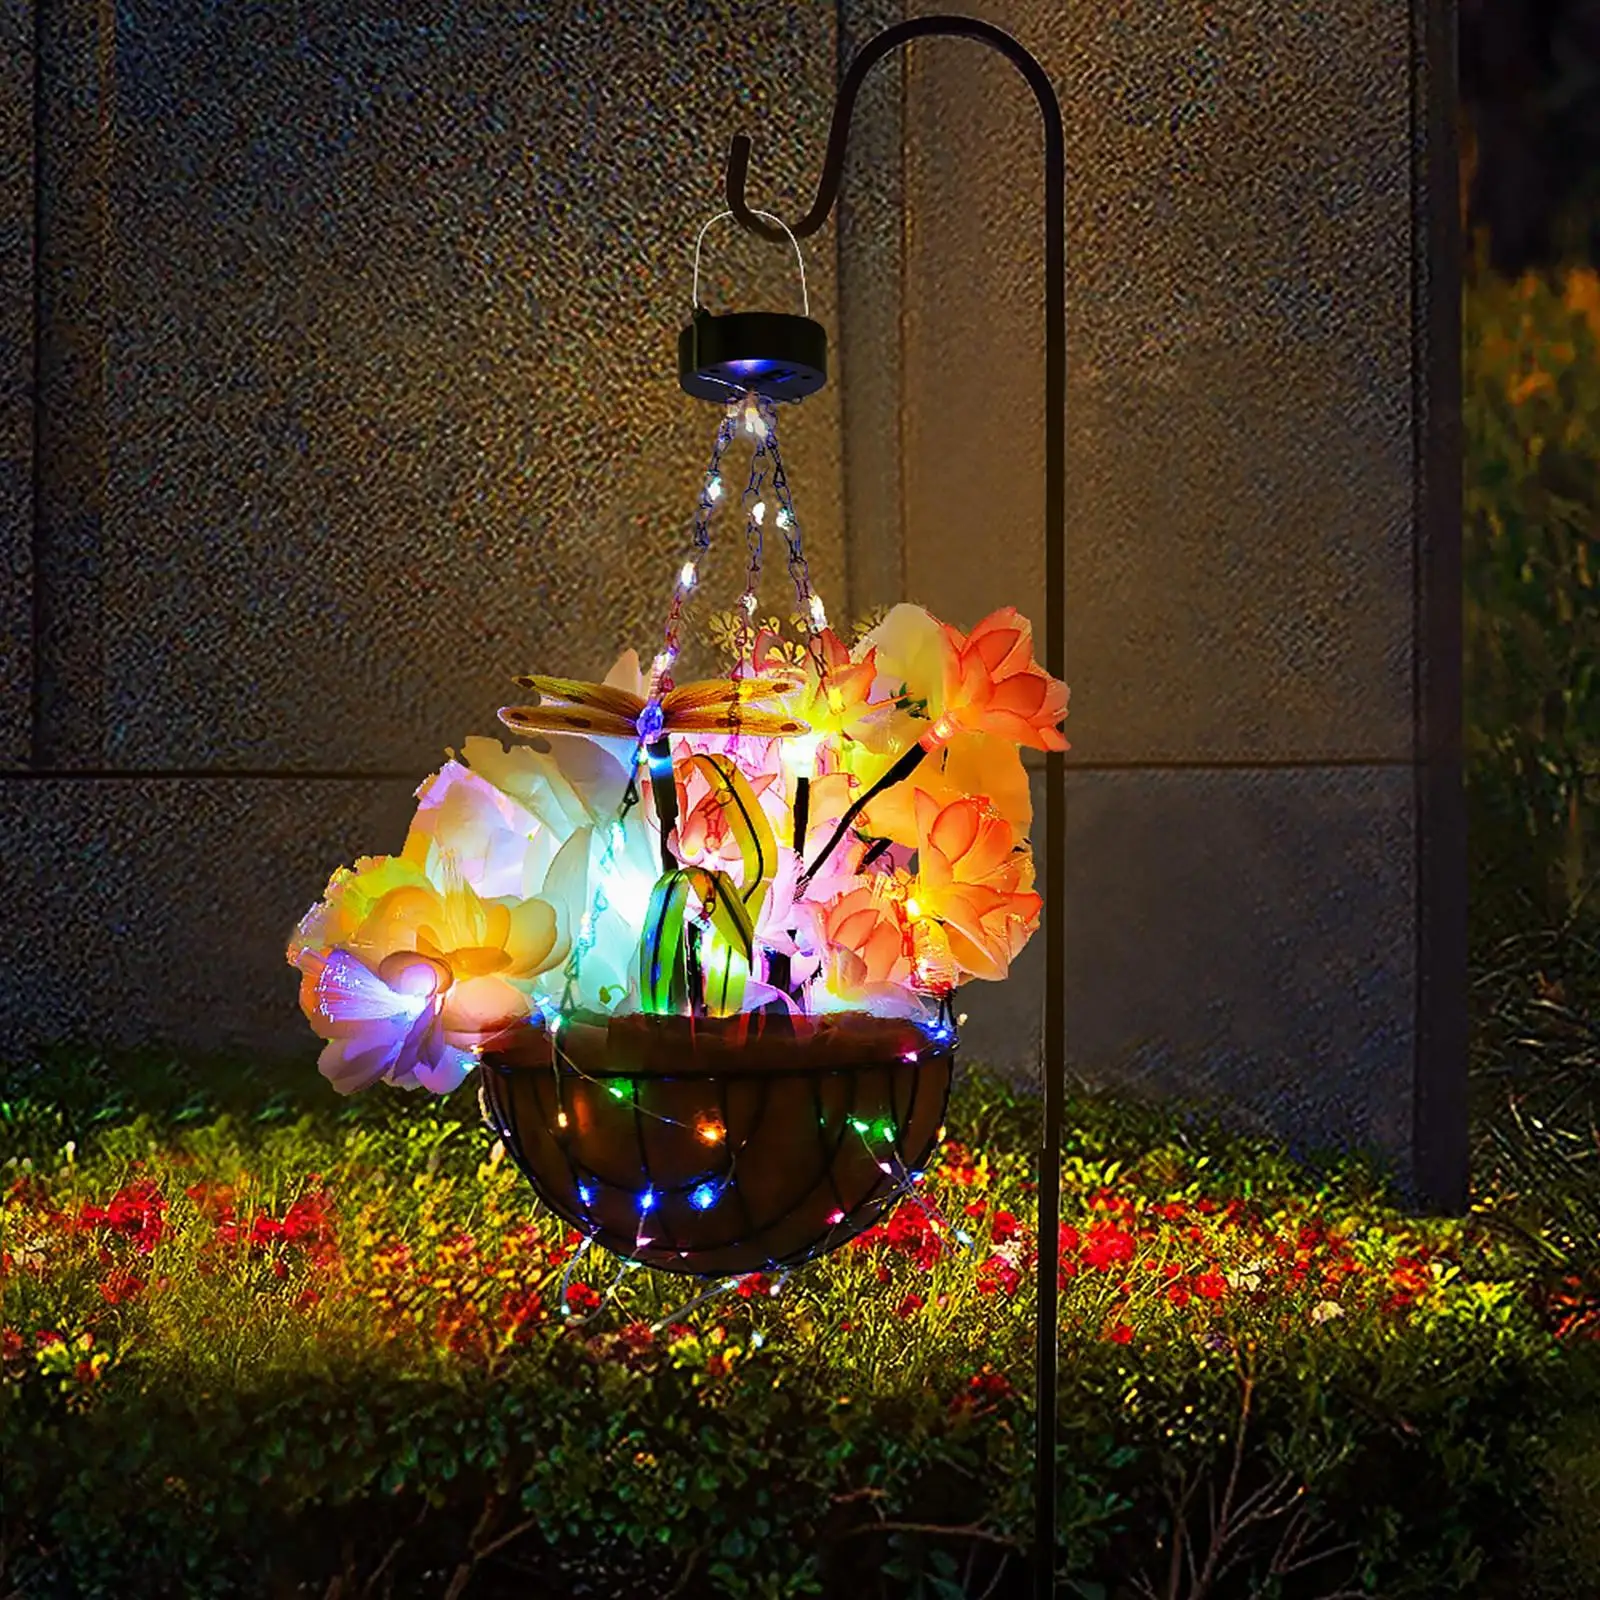 Basket Light Artificial Flower Garden Decor Simulation LED Lights Lawn Lamp